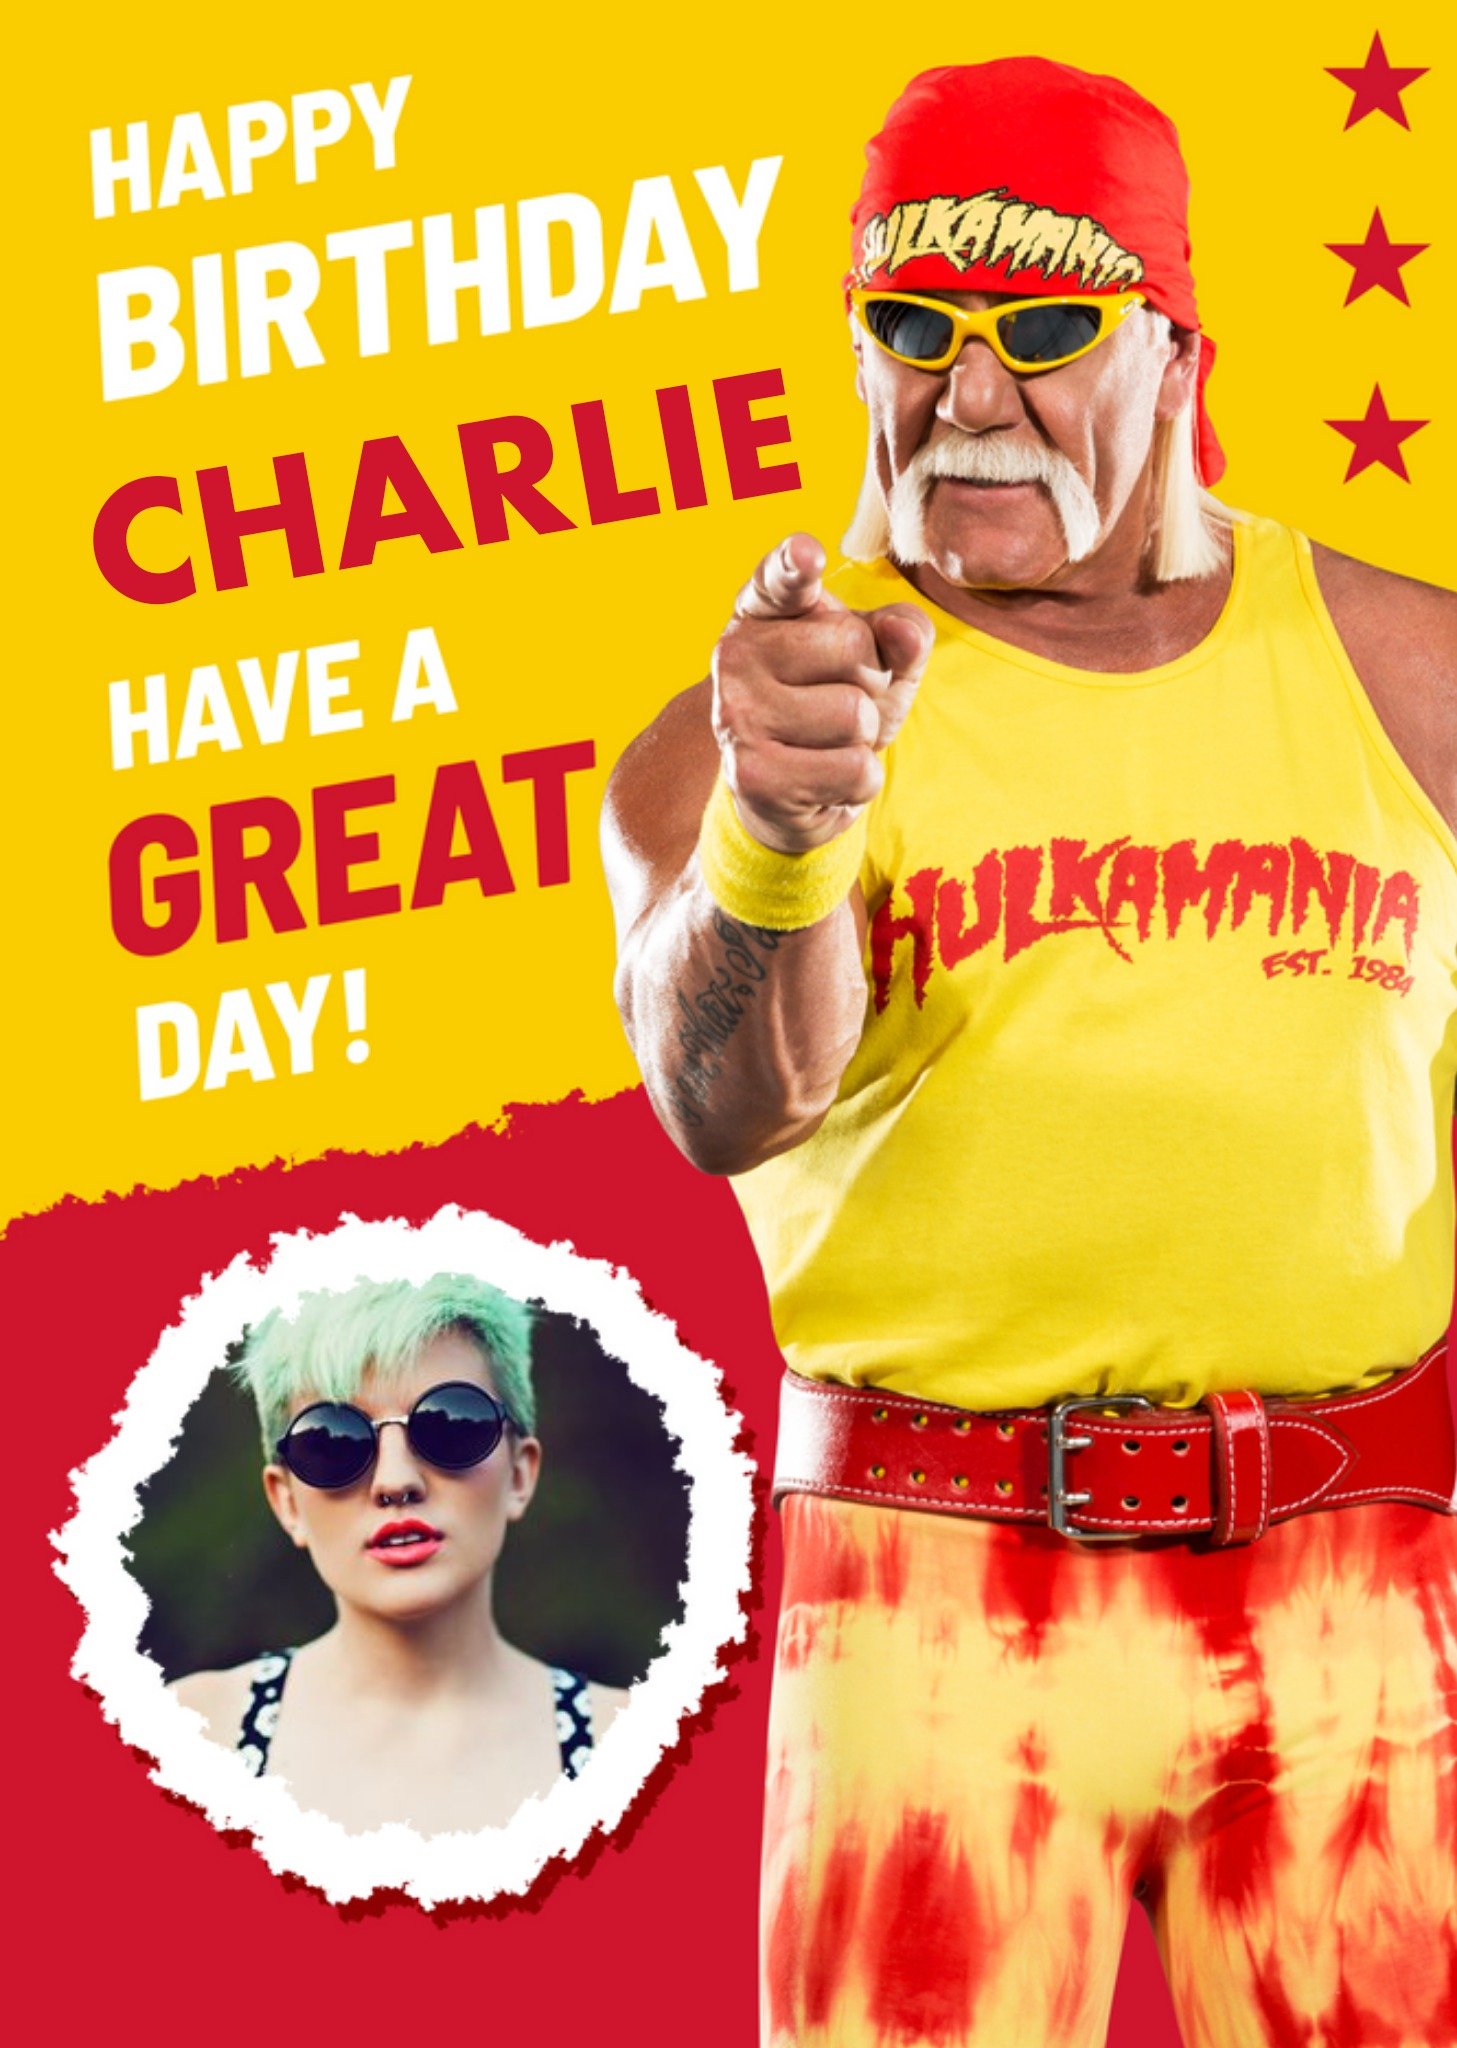 Wwe Hulkmania Have A Great Day Photo Upload Birthday Card Ecard